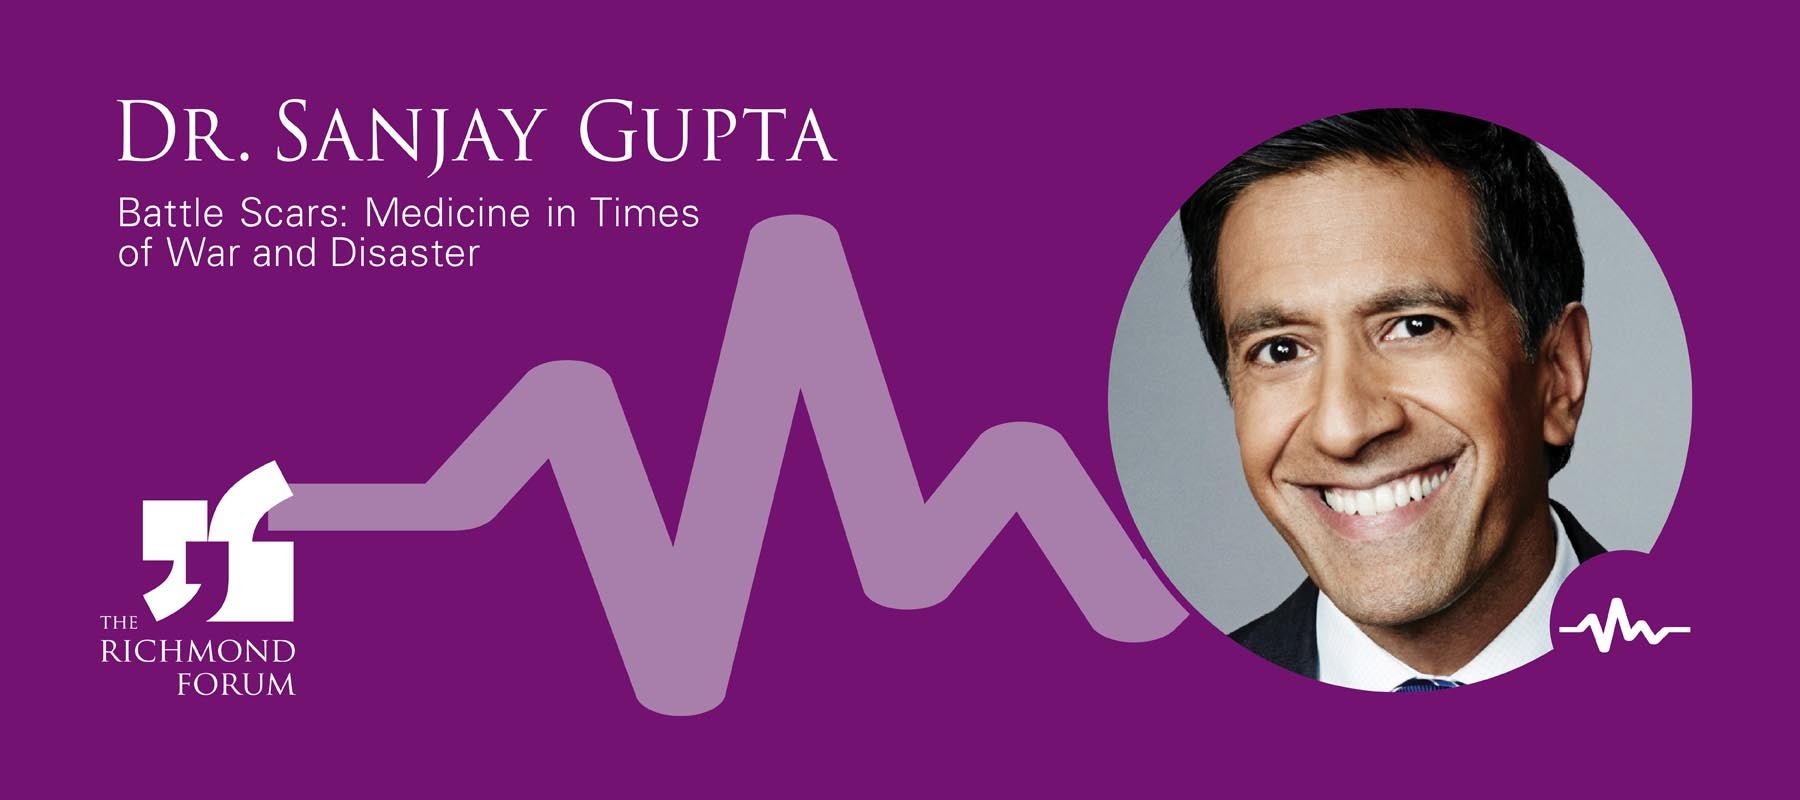 The Richmond Forum Presents Dr. Sanjay Gupta